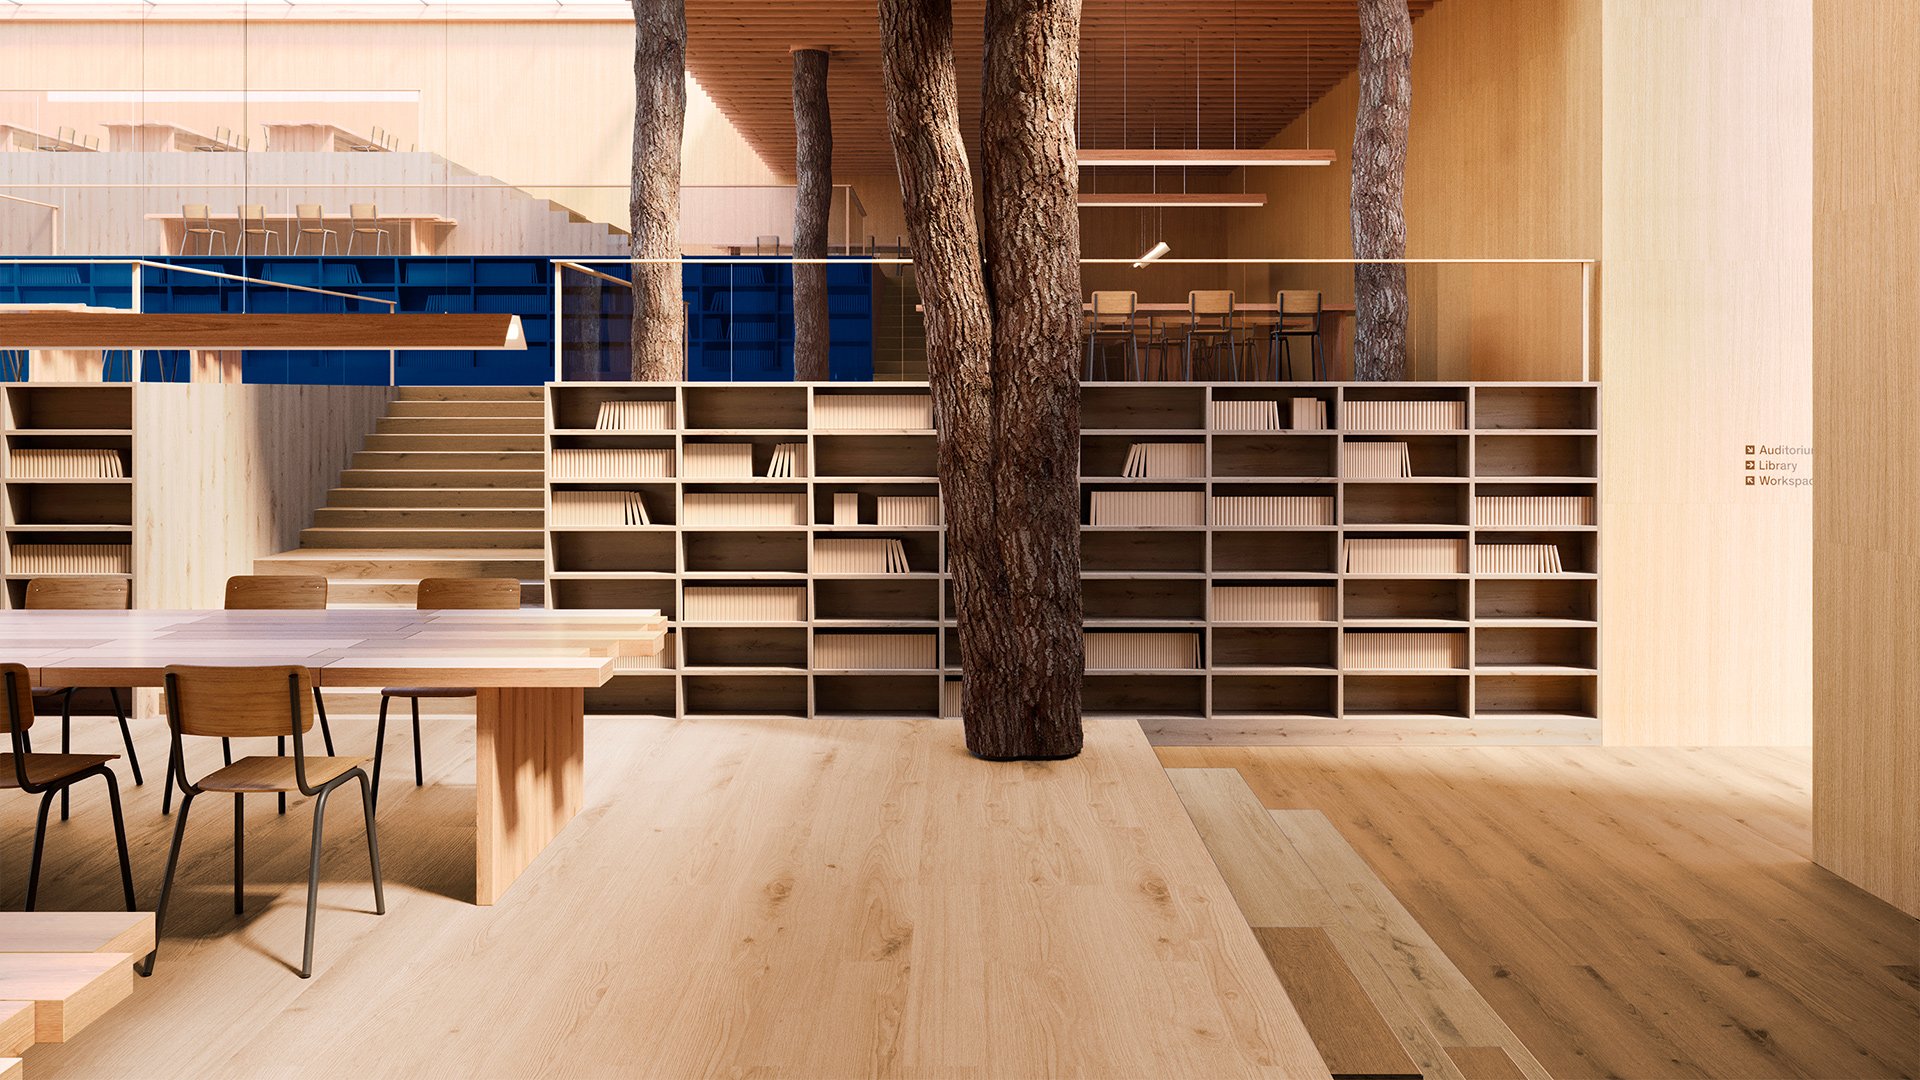 Modular vinyl flooring in an education space